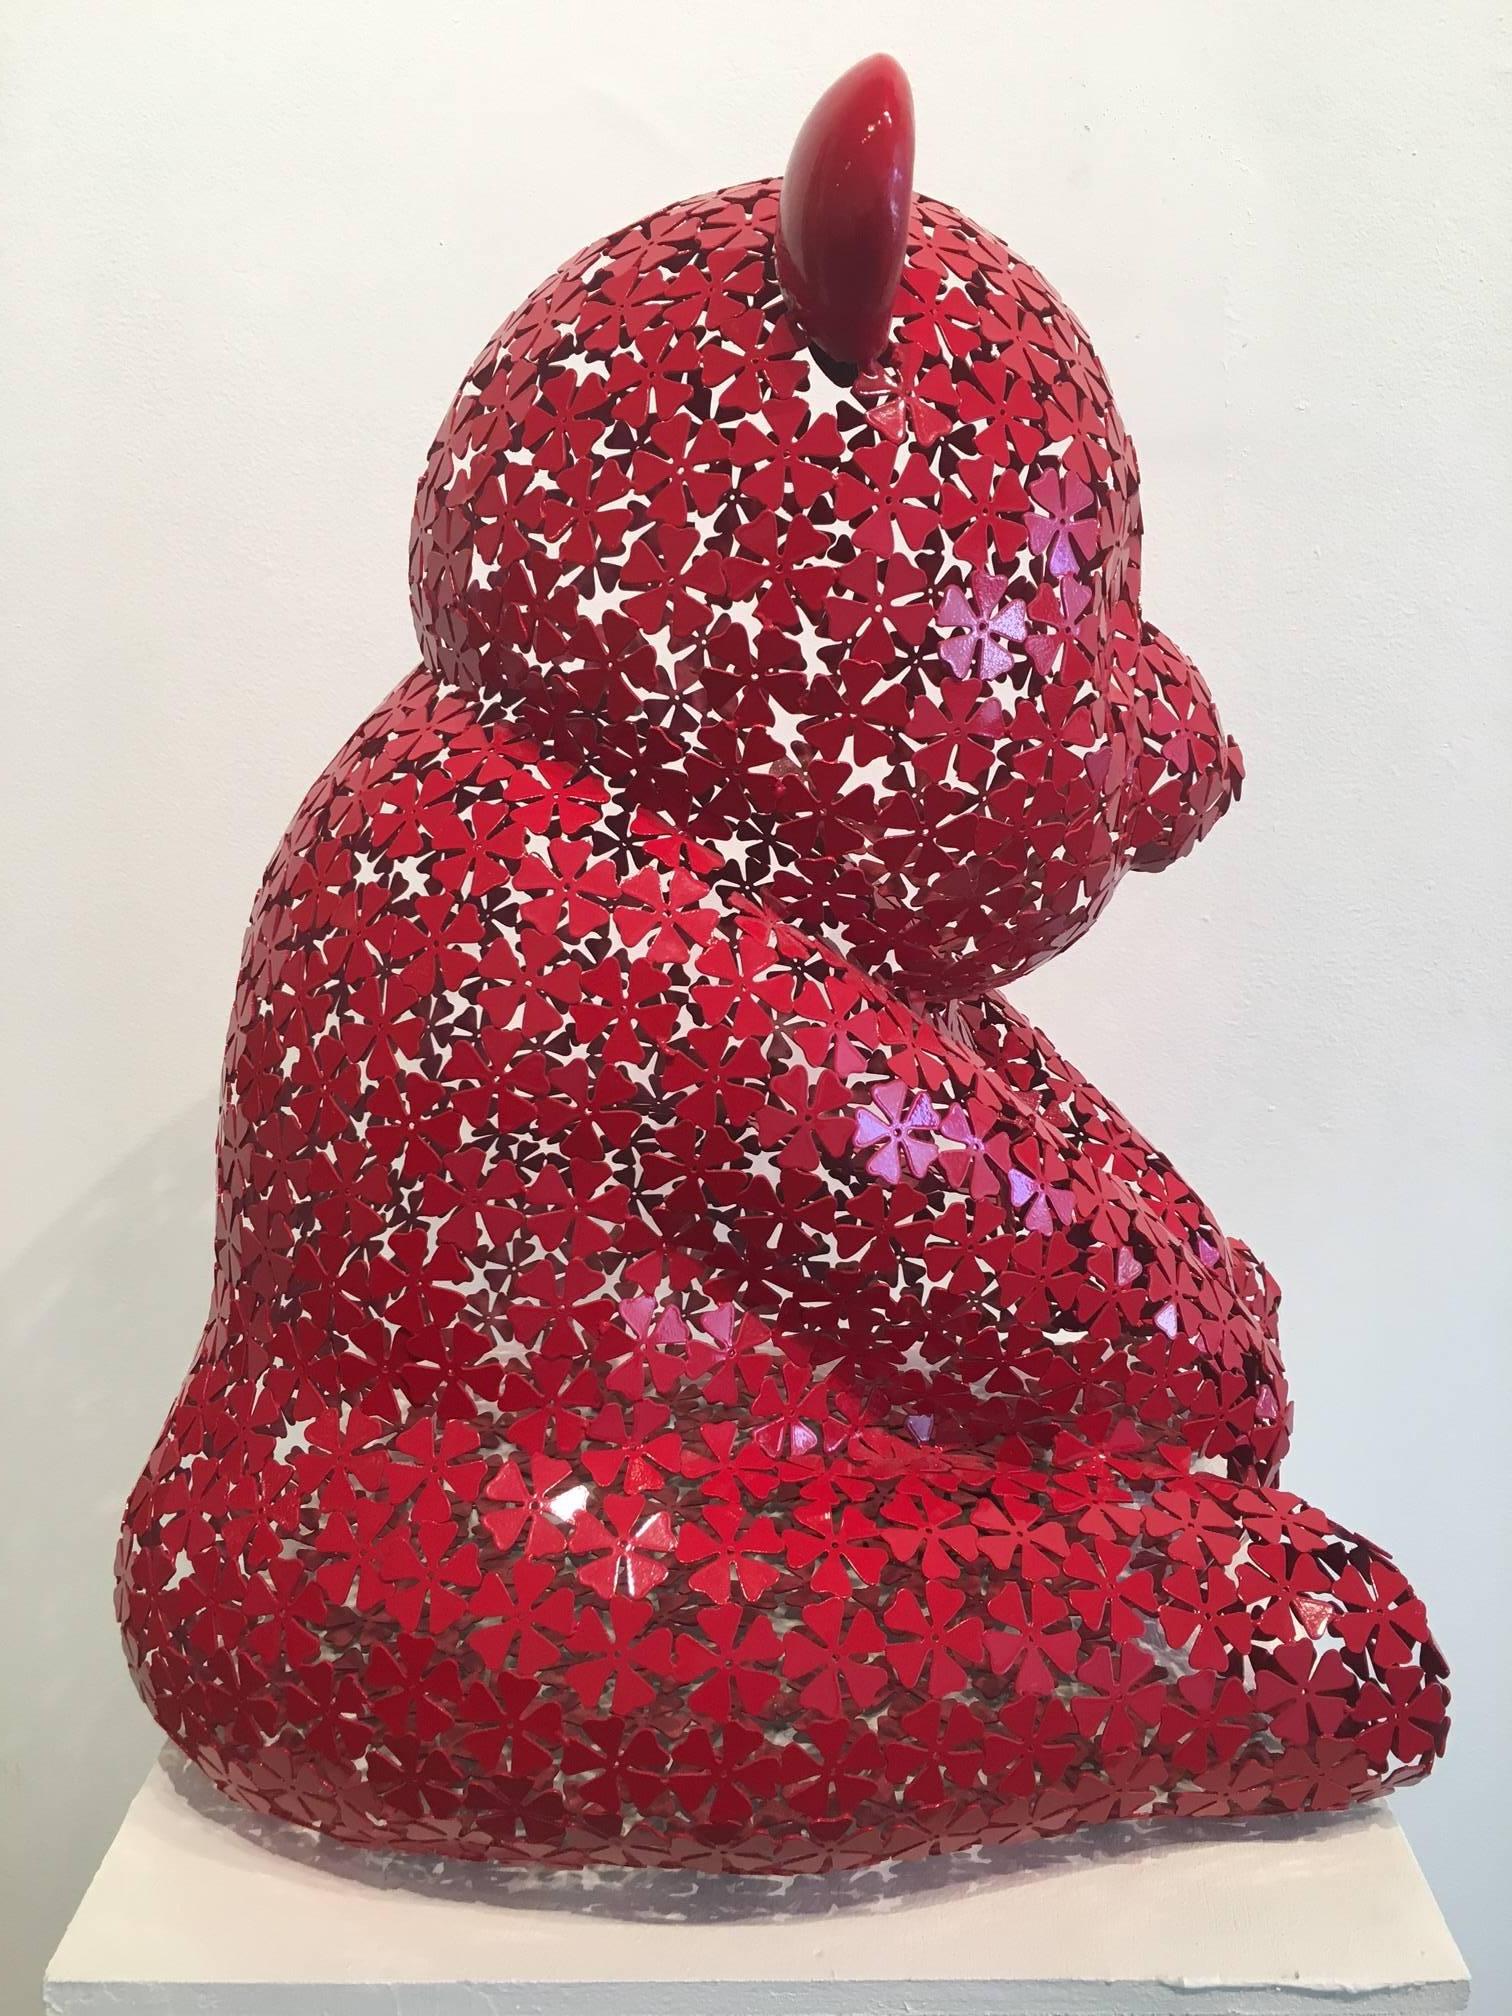  Hiro Ando bear Red PANDASAN FLOWERPOWER  original sculpture - Sculpture by HIRO ANDO